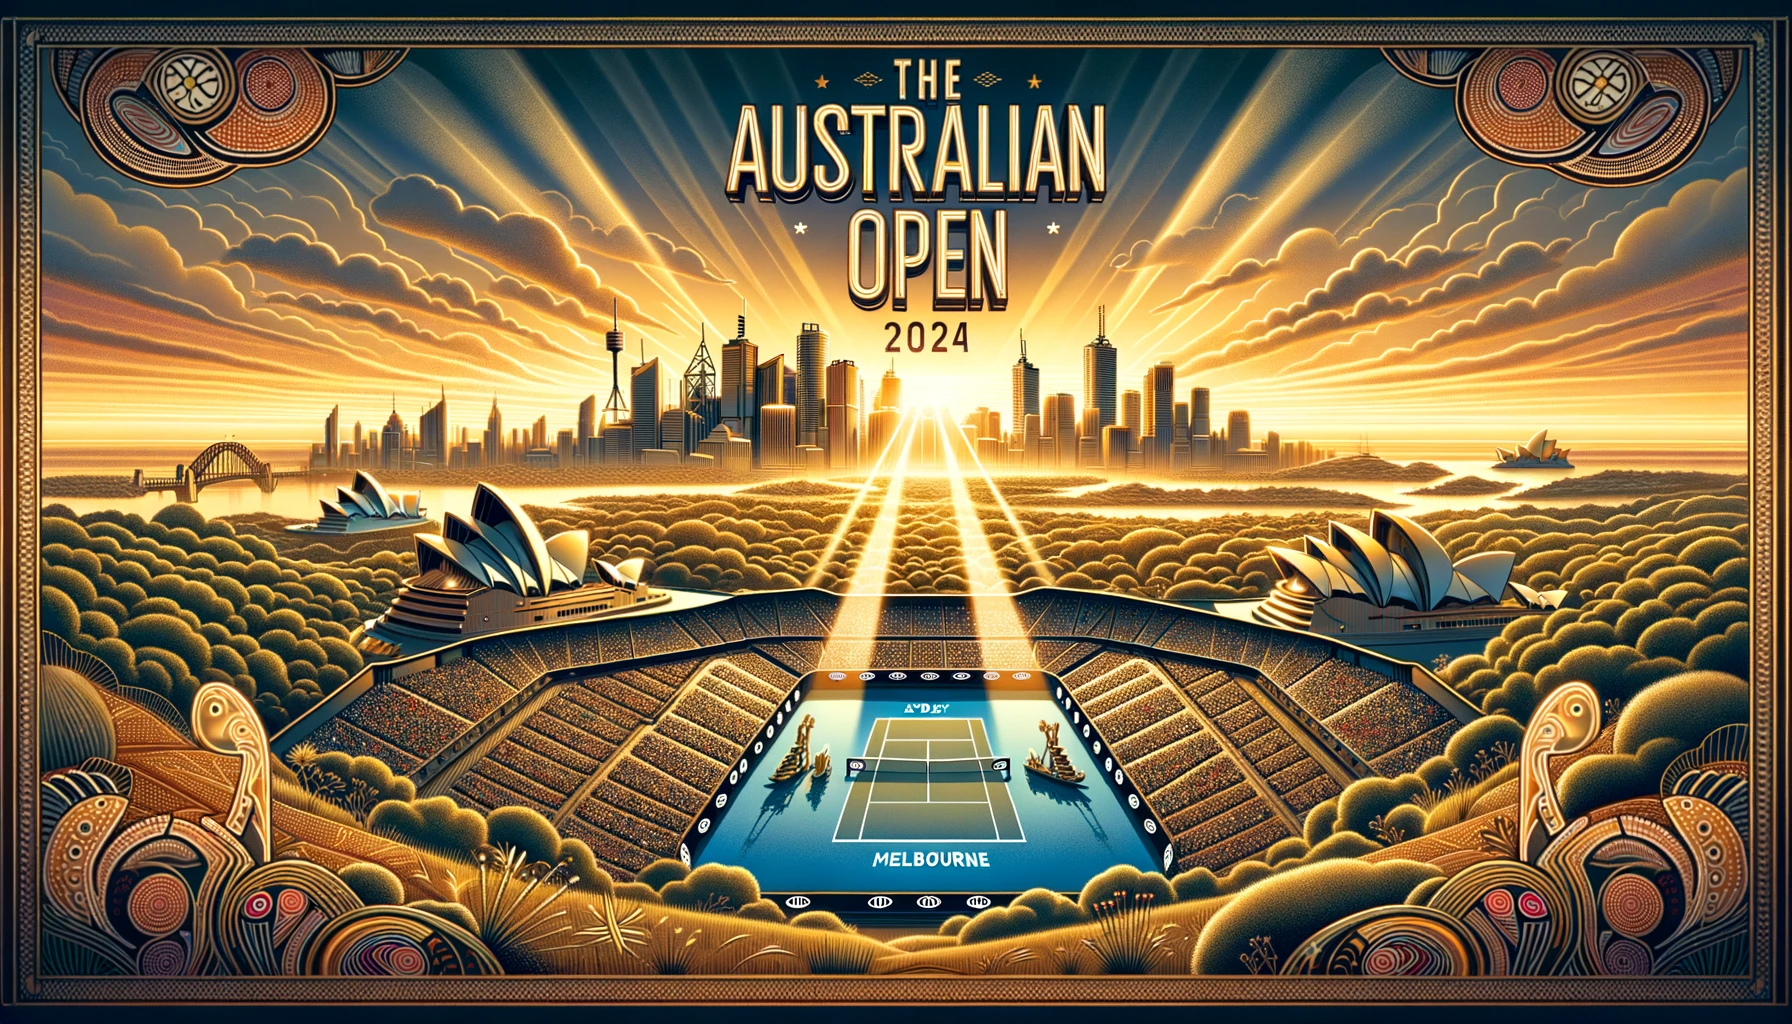 The Australian Open 2024